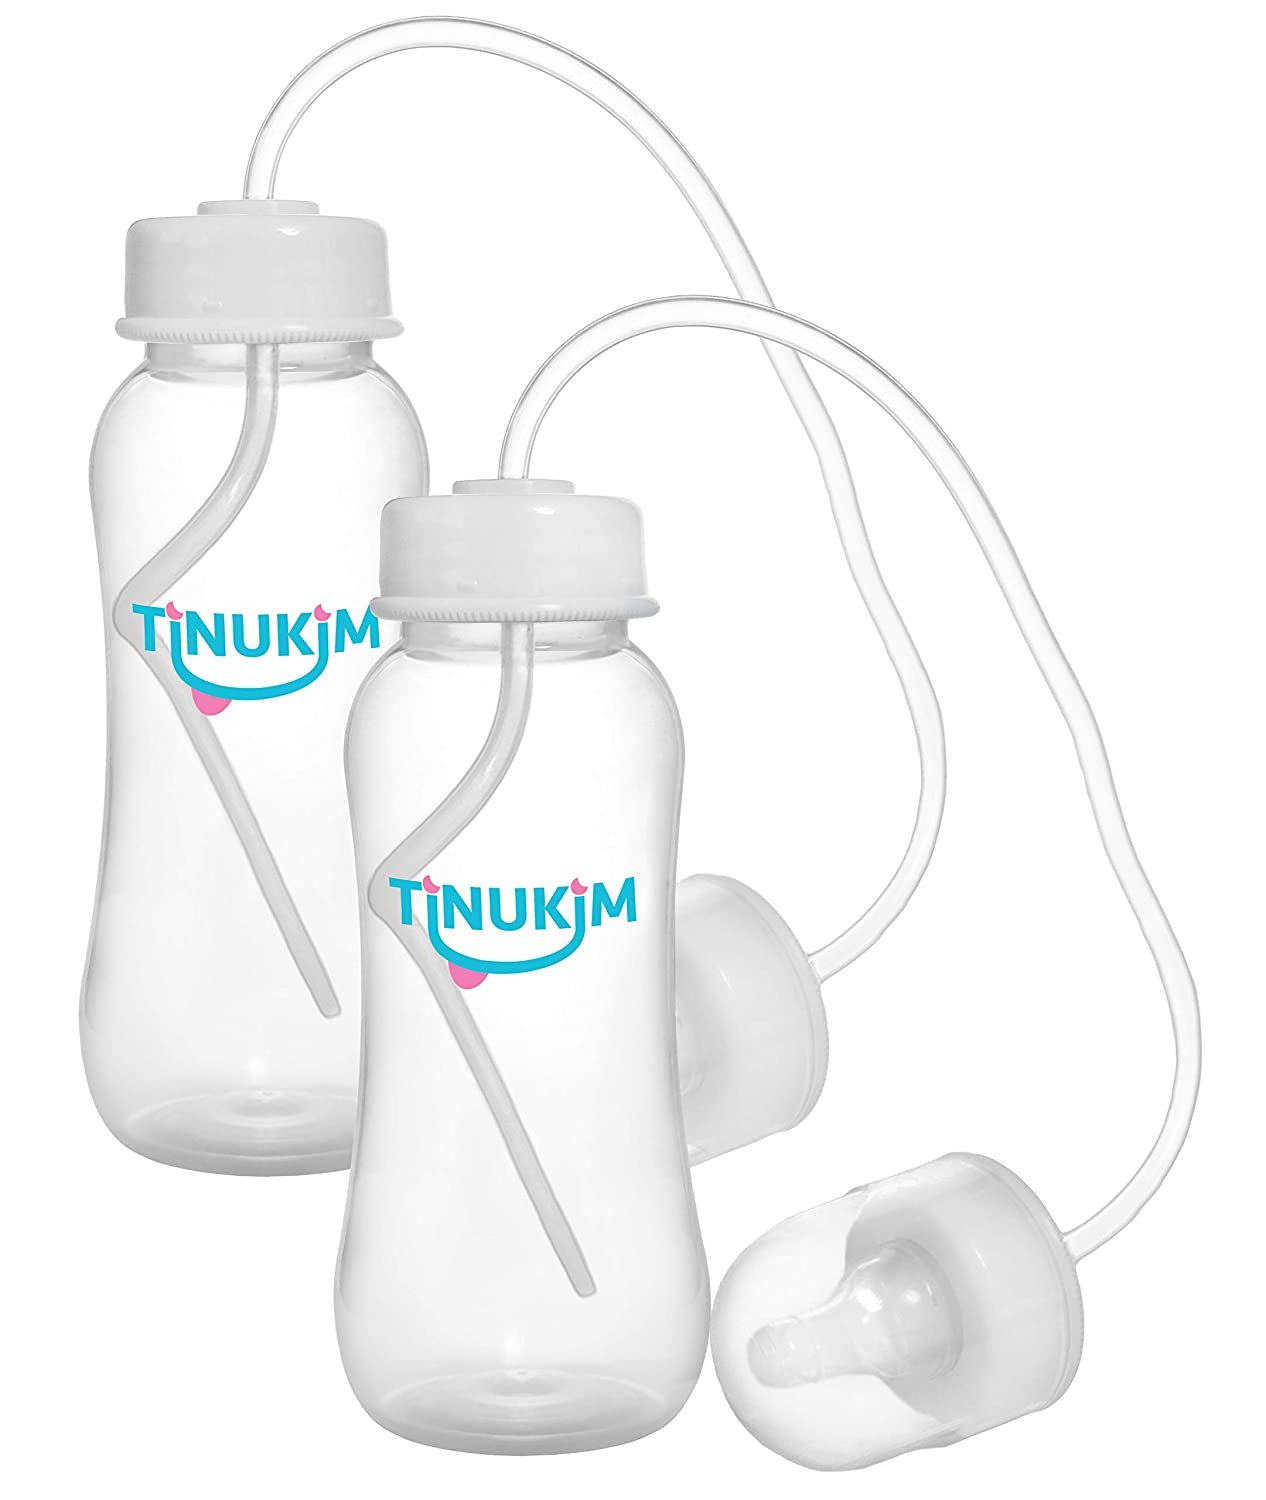 Tinukim iFeed Self-Feeding Baby Bottle - 9oz Tube, Anti-Colic Nursing System, White, 2-Pack